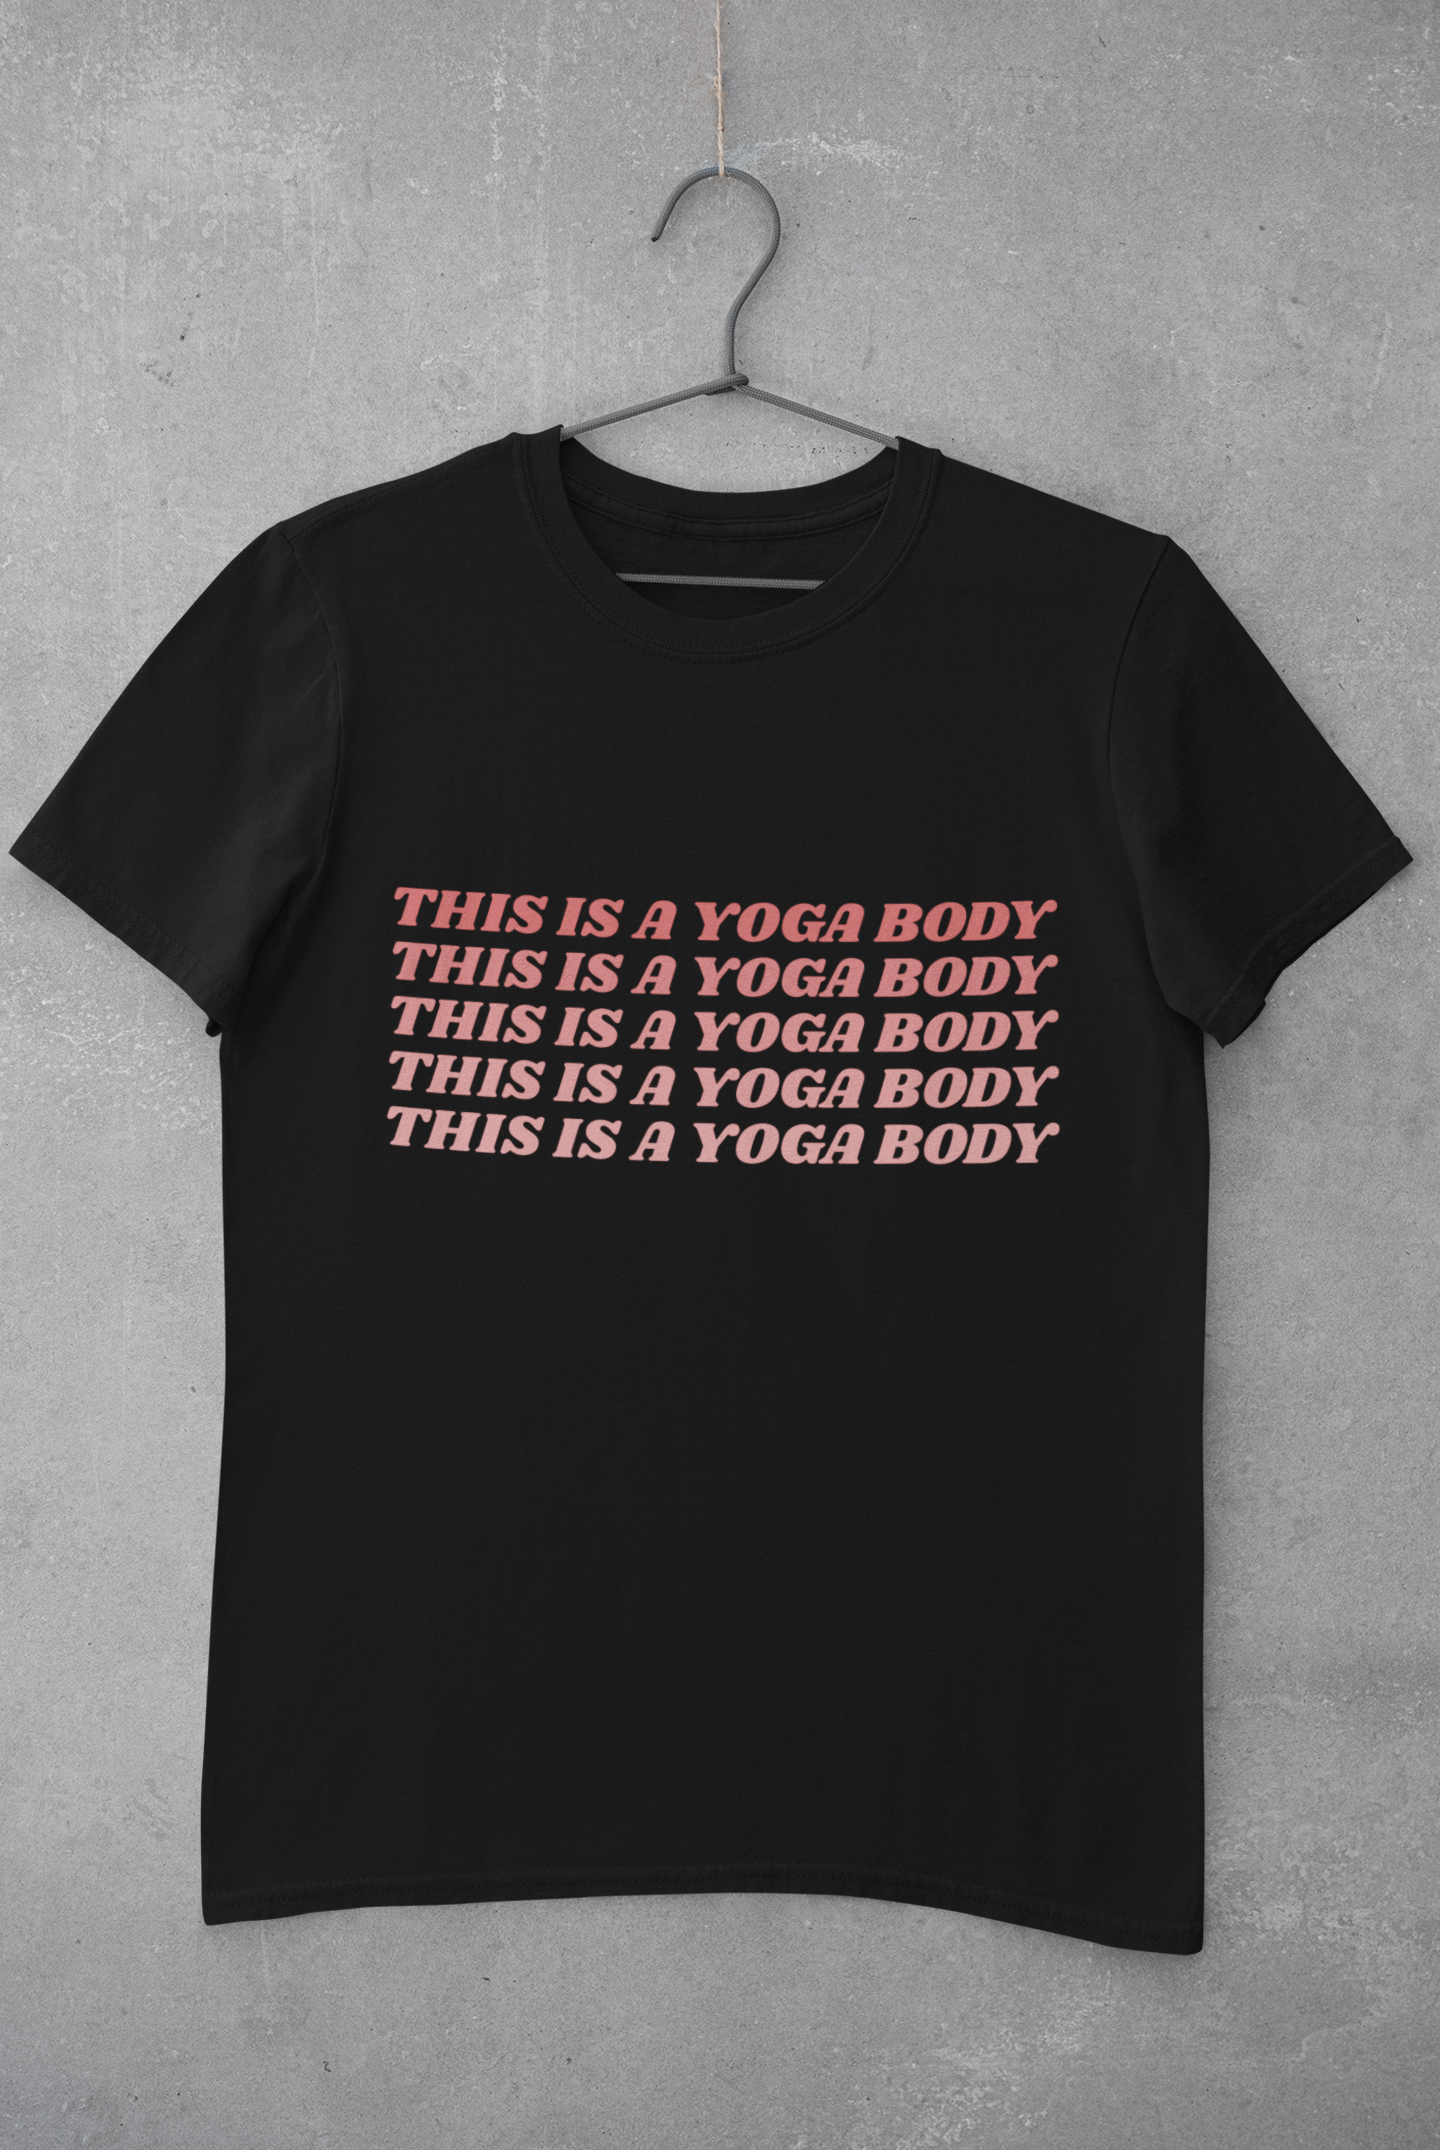 The Yoga Body Tee